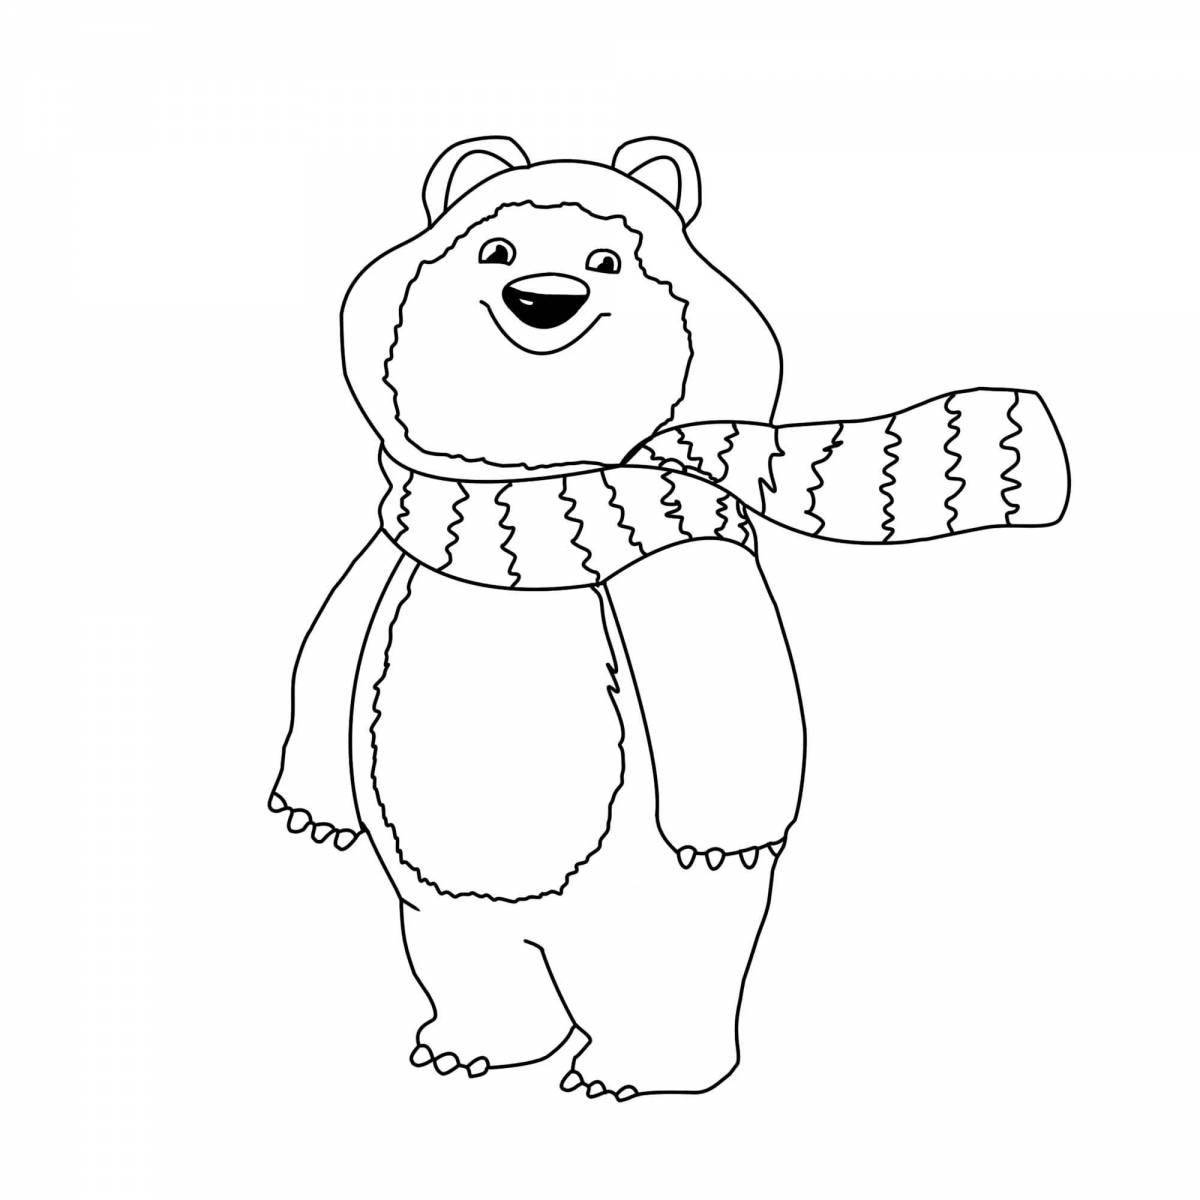 Brilliant Russian bear coloring book